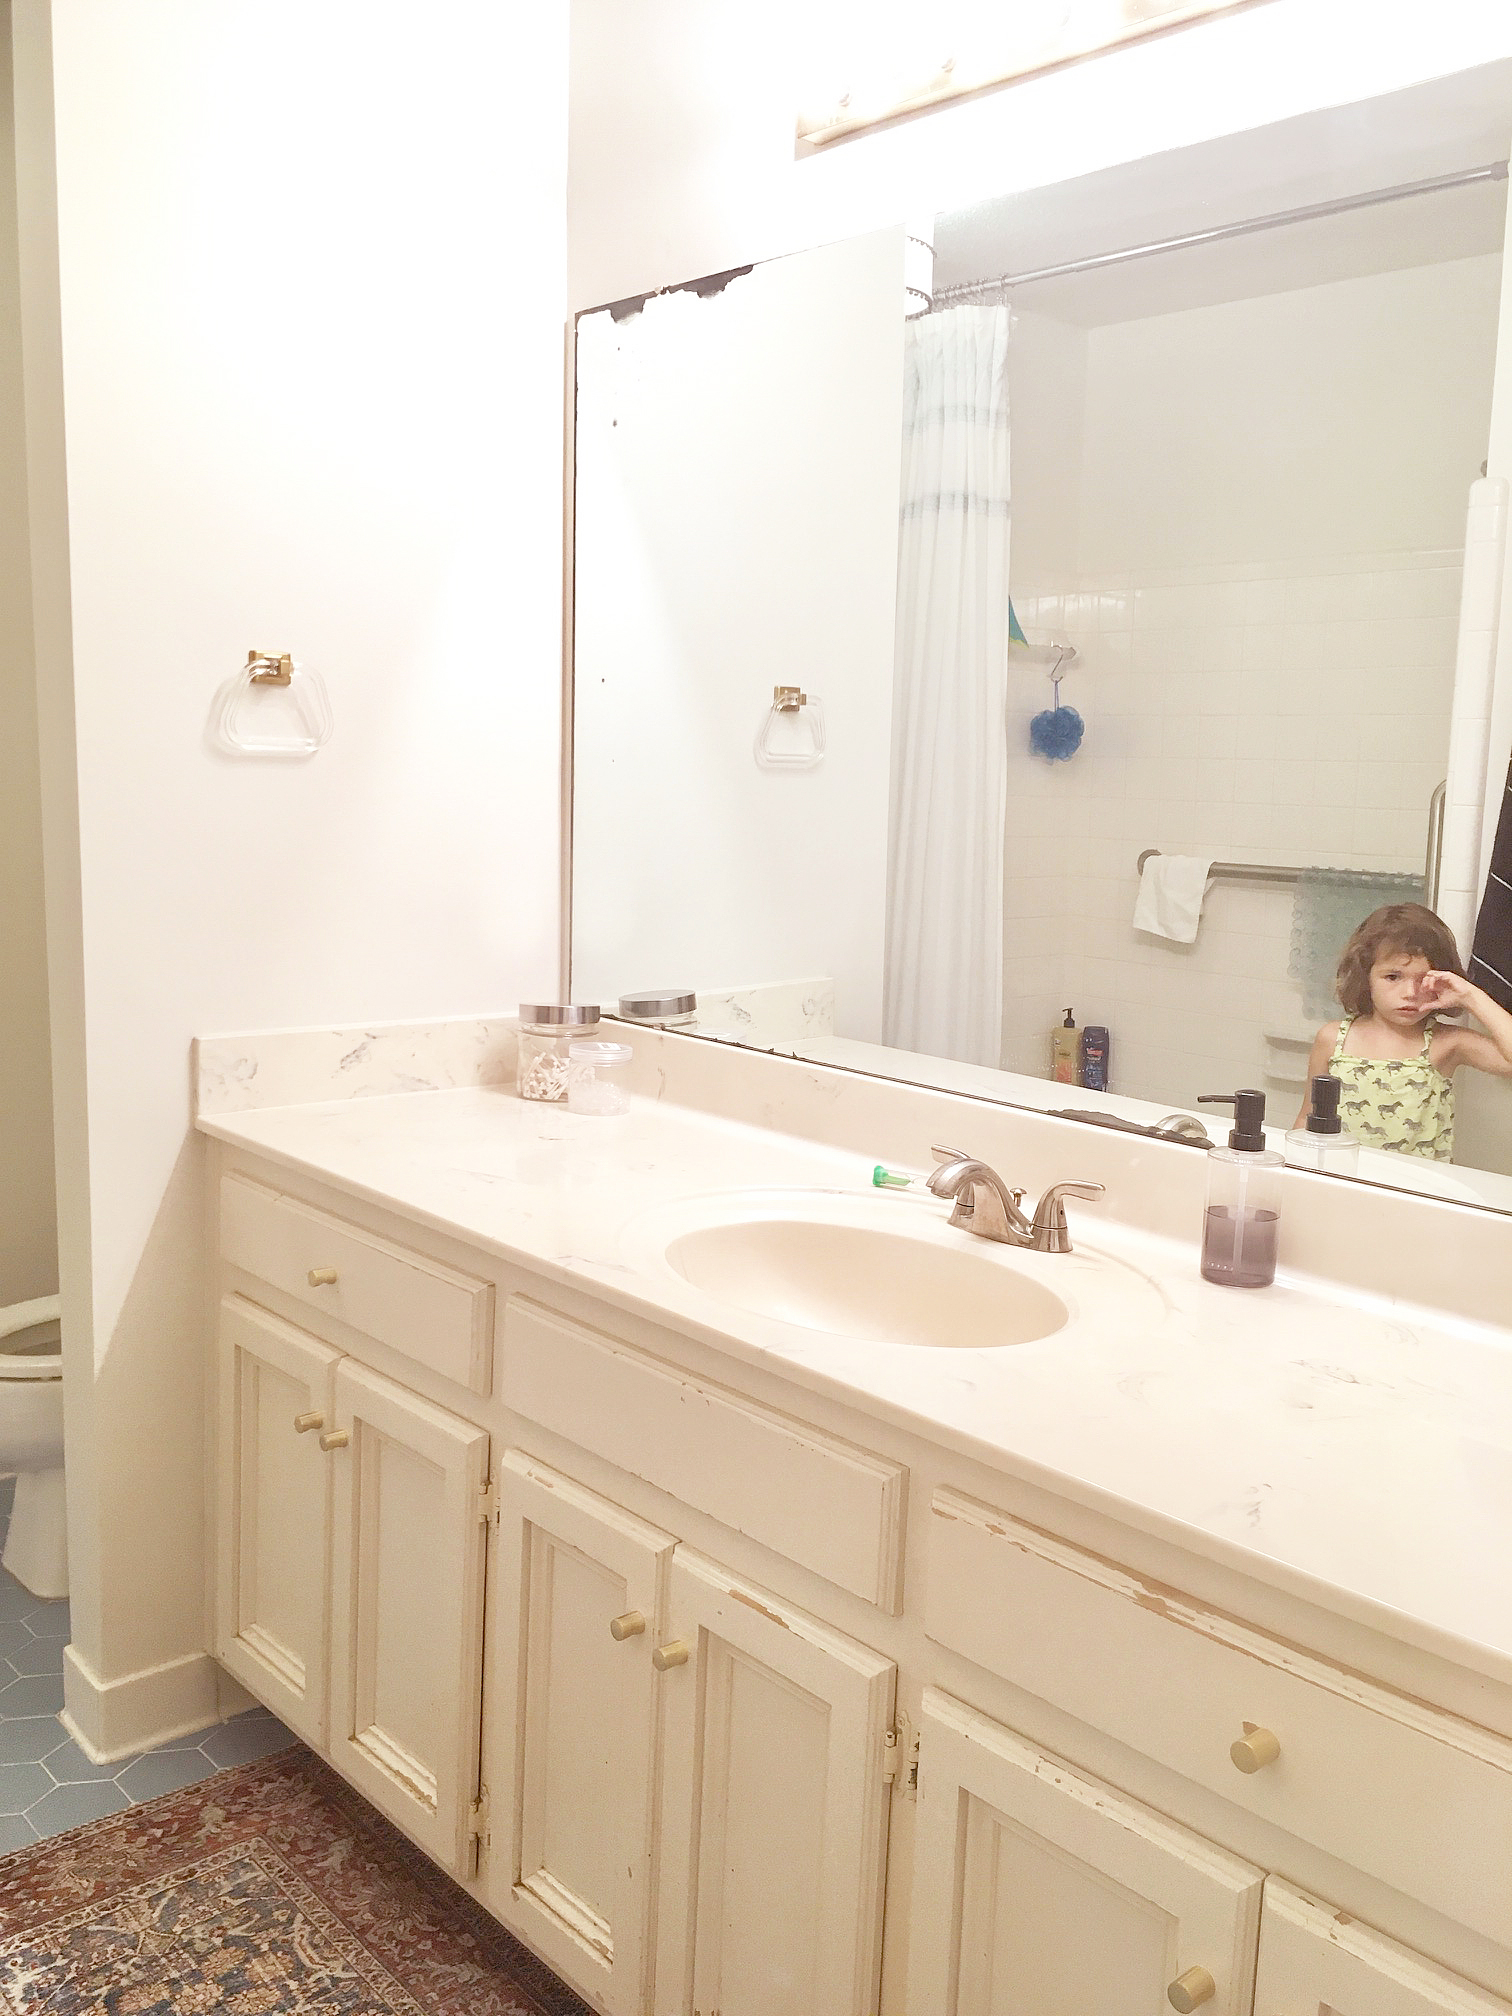 Goodbye, Pine Cabinets!, Bathroom Progress Report, ORC Week 5 - Small  Stuff Counts